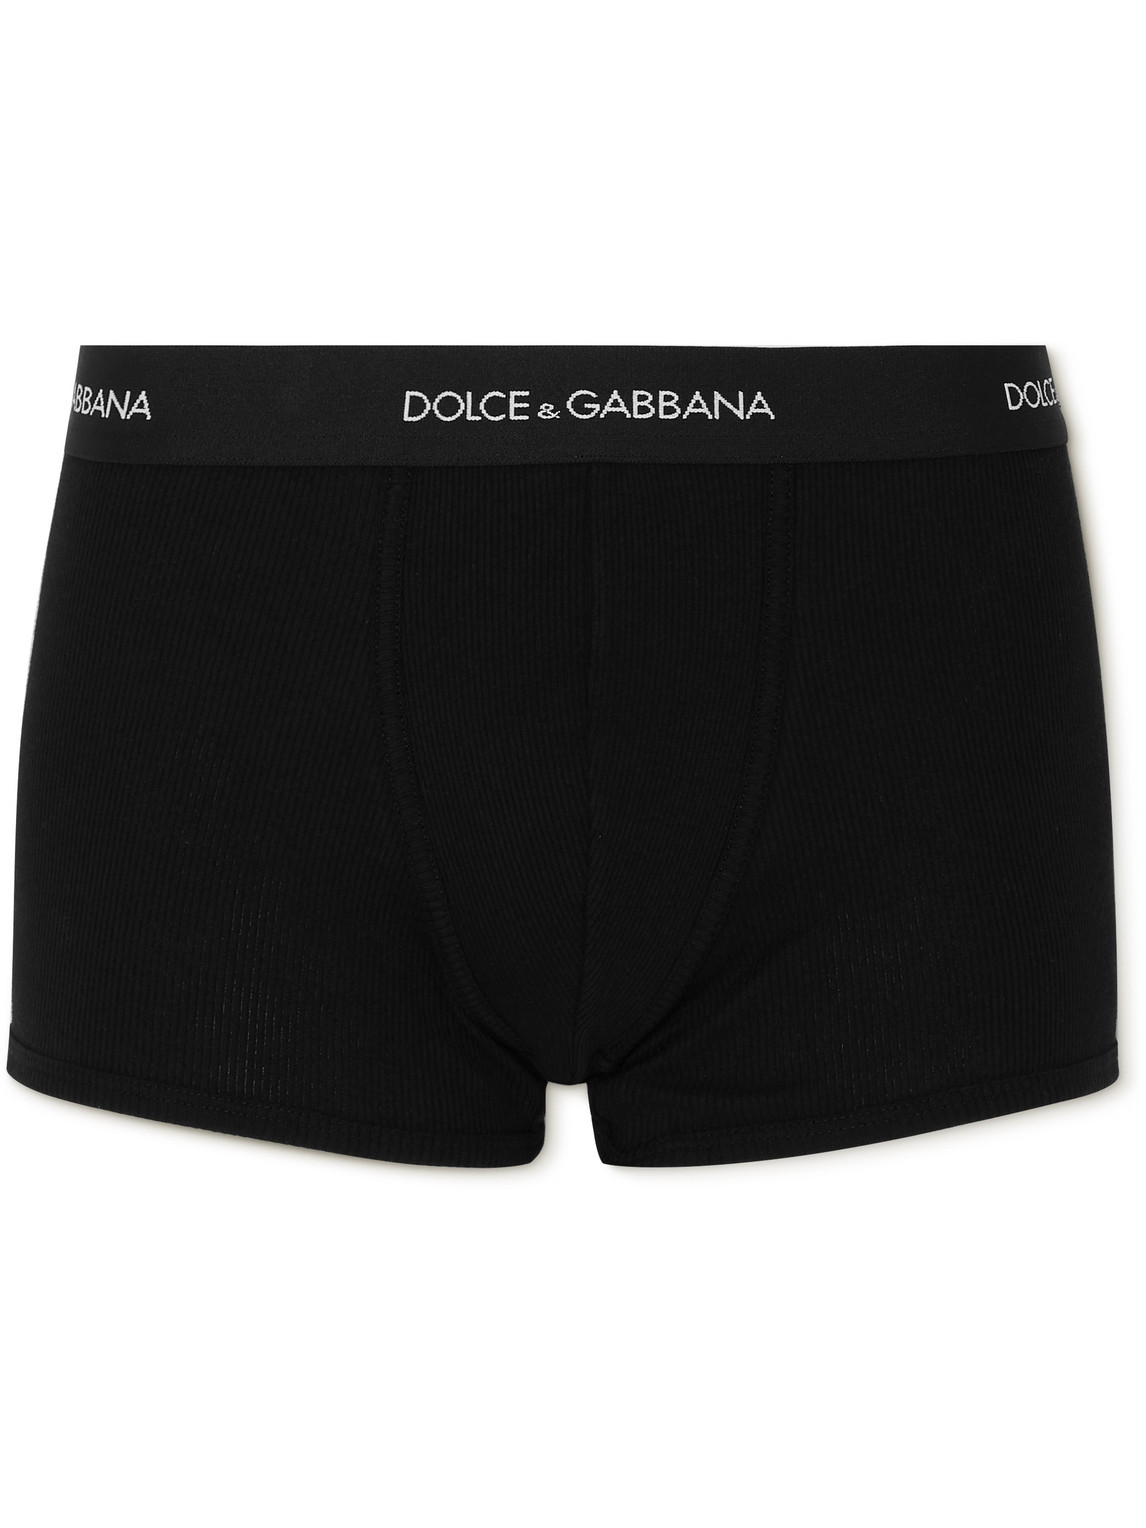 Dusky Blue Dolce & Gabbana Banana Print Men's Boxer Trunk 